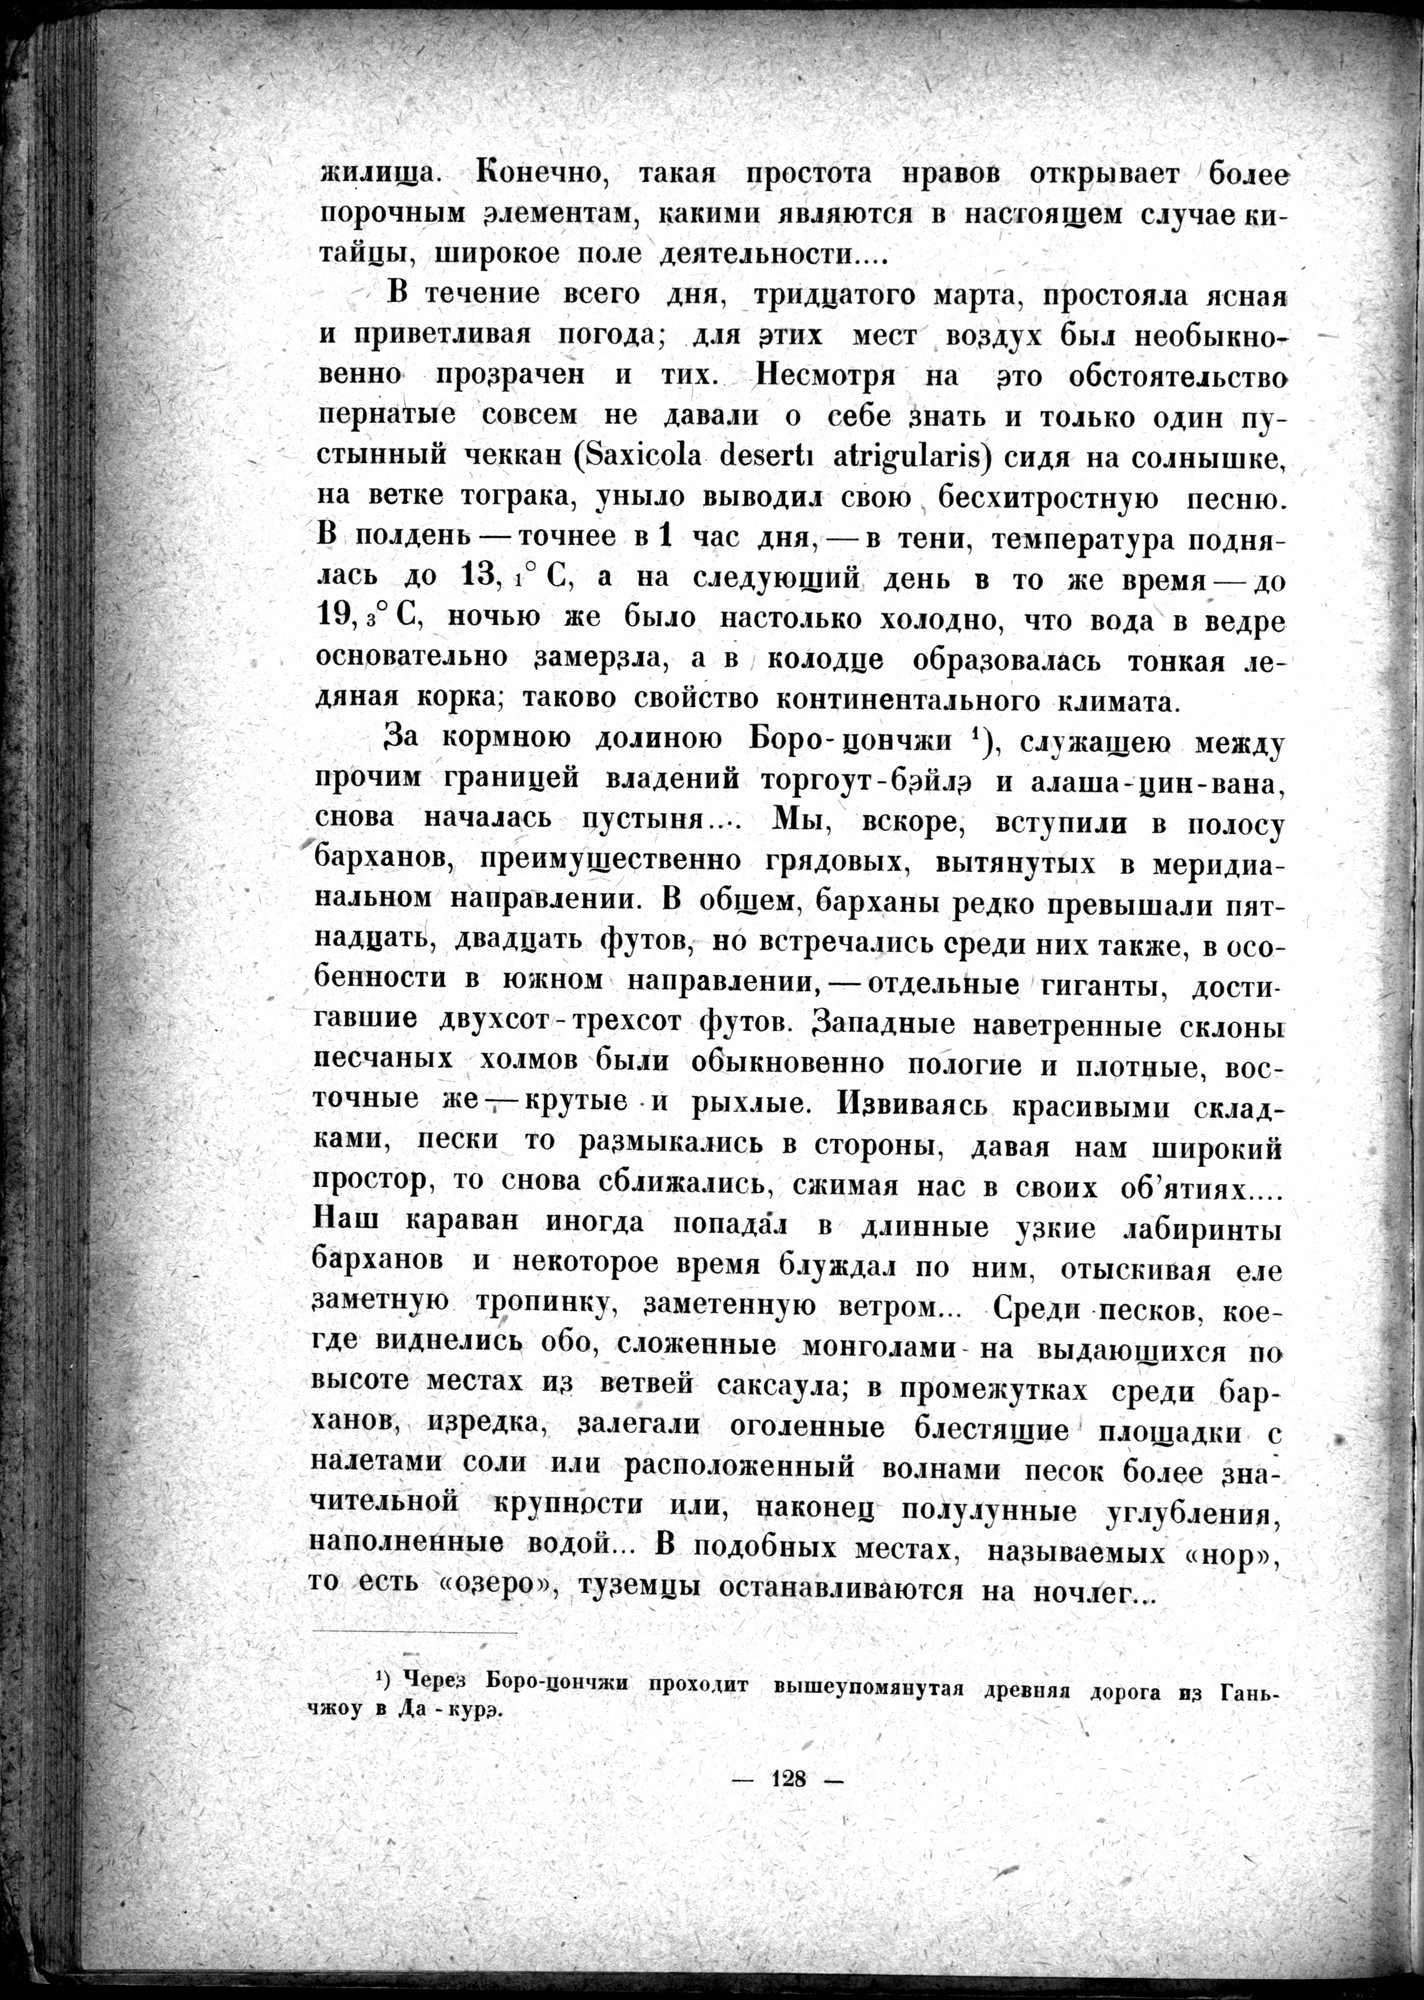 Mongoliya i Amdo i mertby gorod Khara-Khoto : vol.1 / Page 154 (Grayscale High Resolution Image)